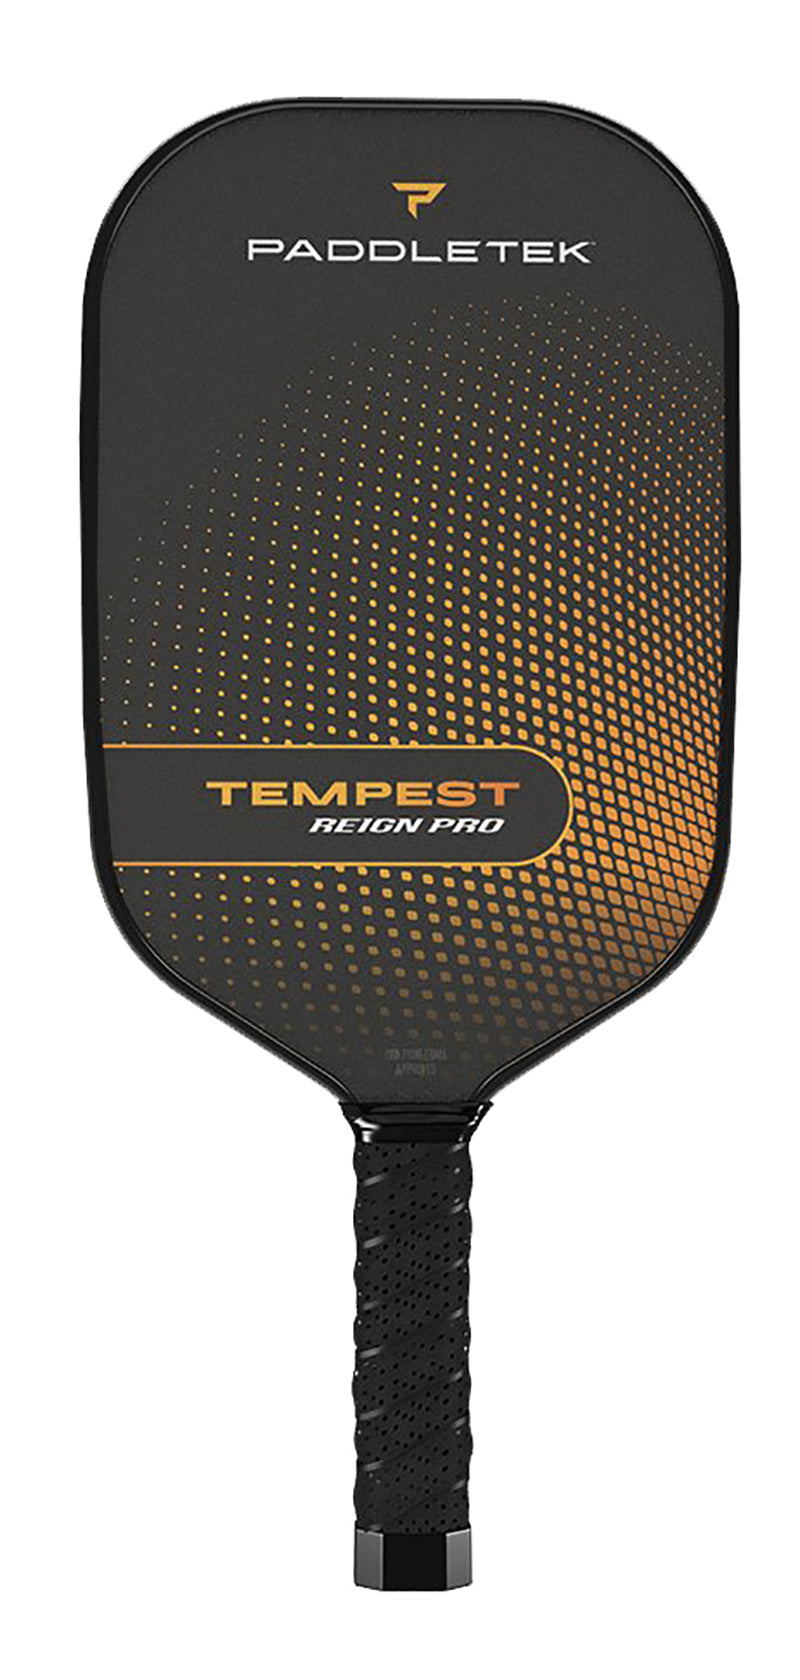 Paddletek Tempest Reign Pro Pickleball Paddle (Standard Grip) (Yellow) vid-40174021541975